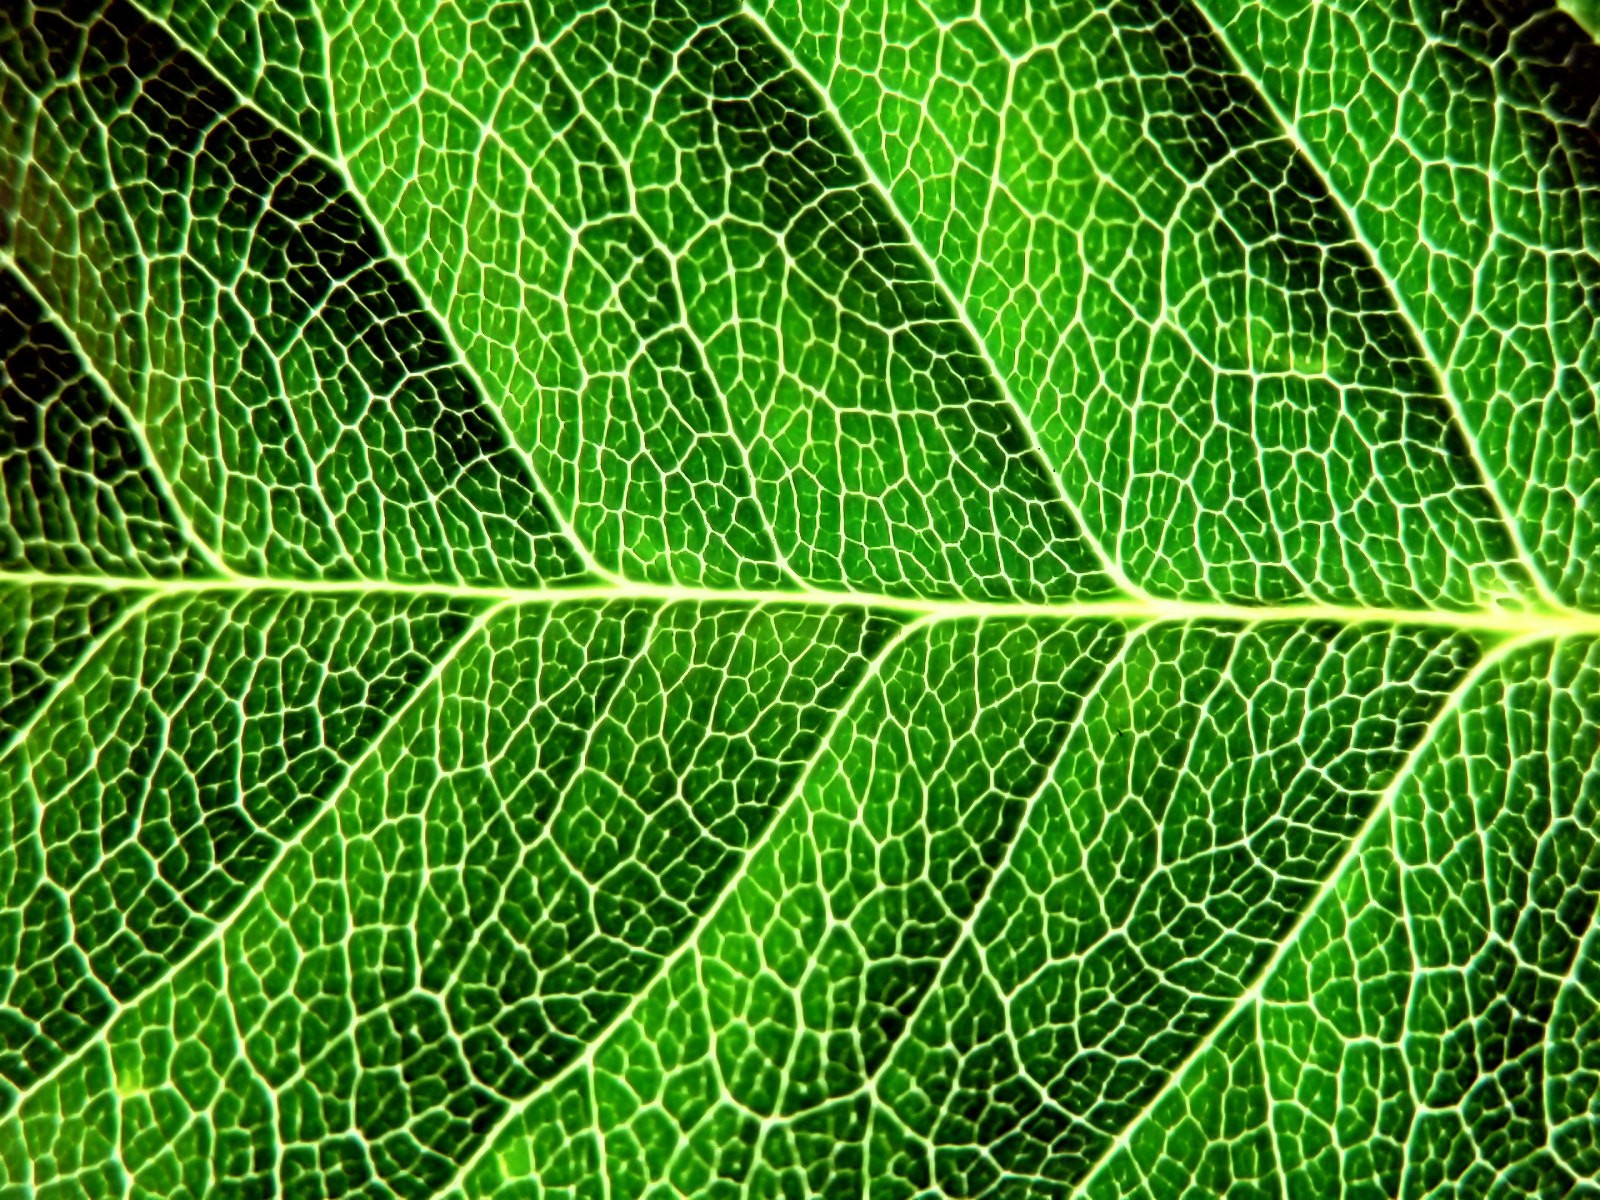 Vistaの植物の壁紙 7 40 1600x1200 壁紙ダウンロード Vistaの植物の壁紙 7 システム 壁紙 V3の壁紙